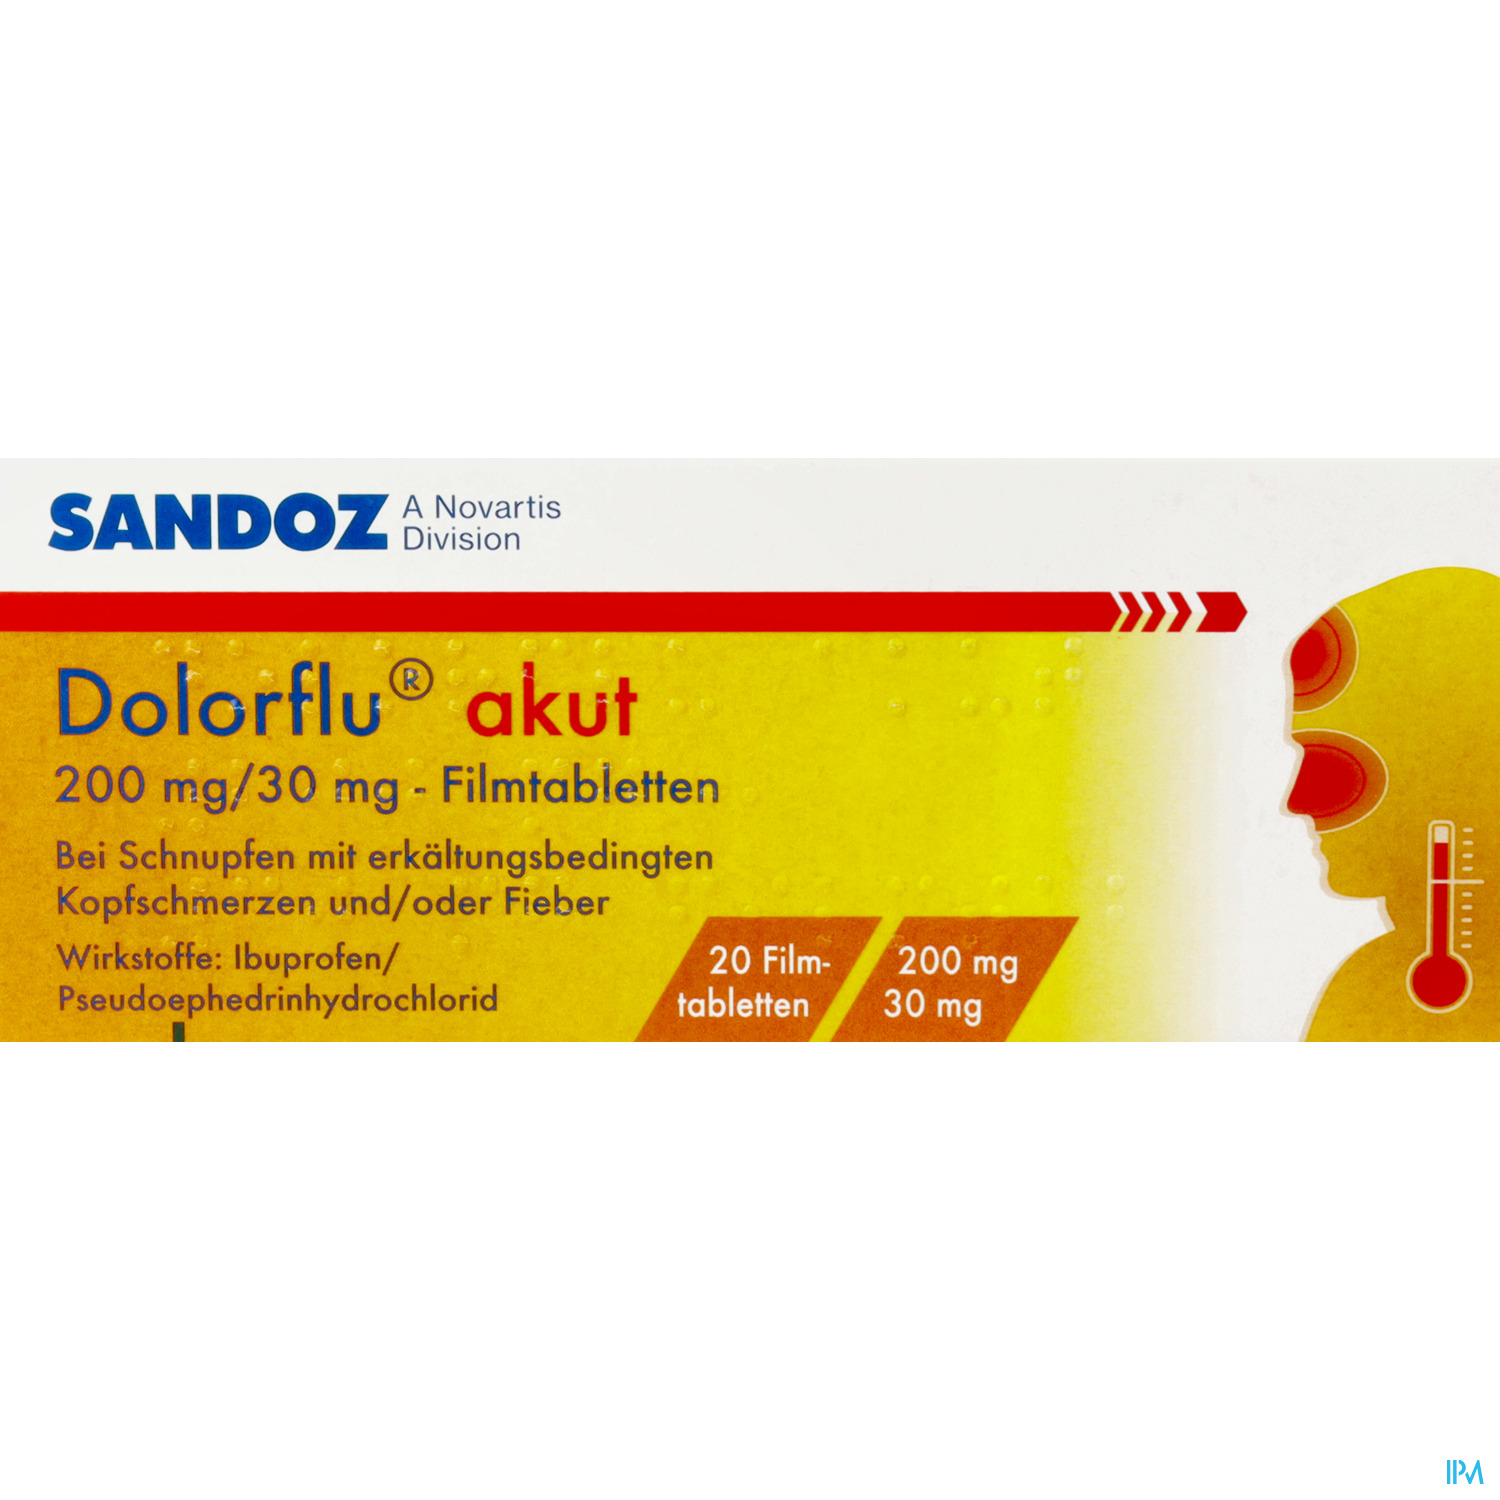 Dolorflu akut 200 mg/30 mg - Filmtabletten